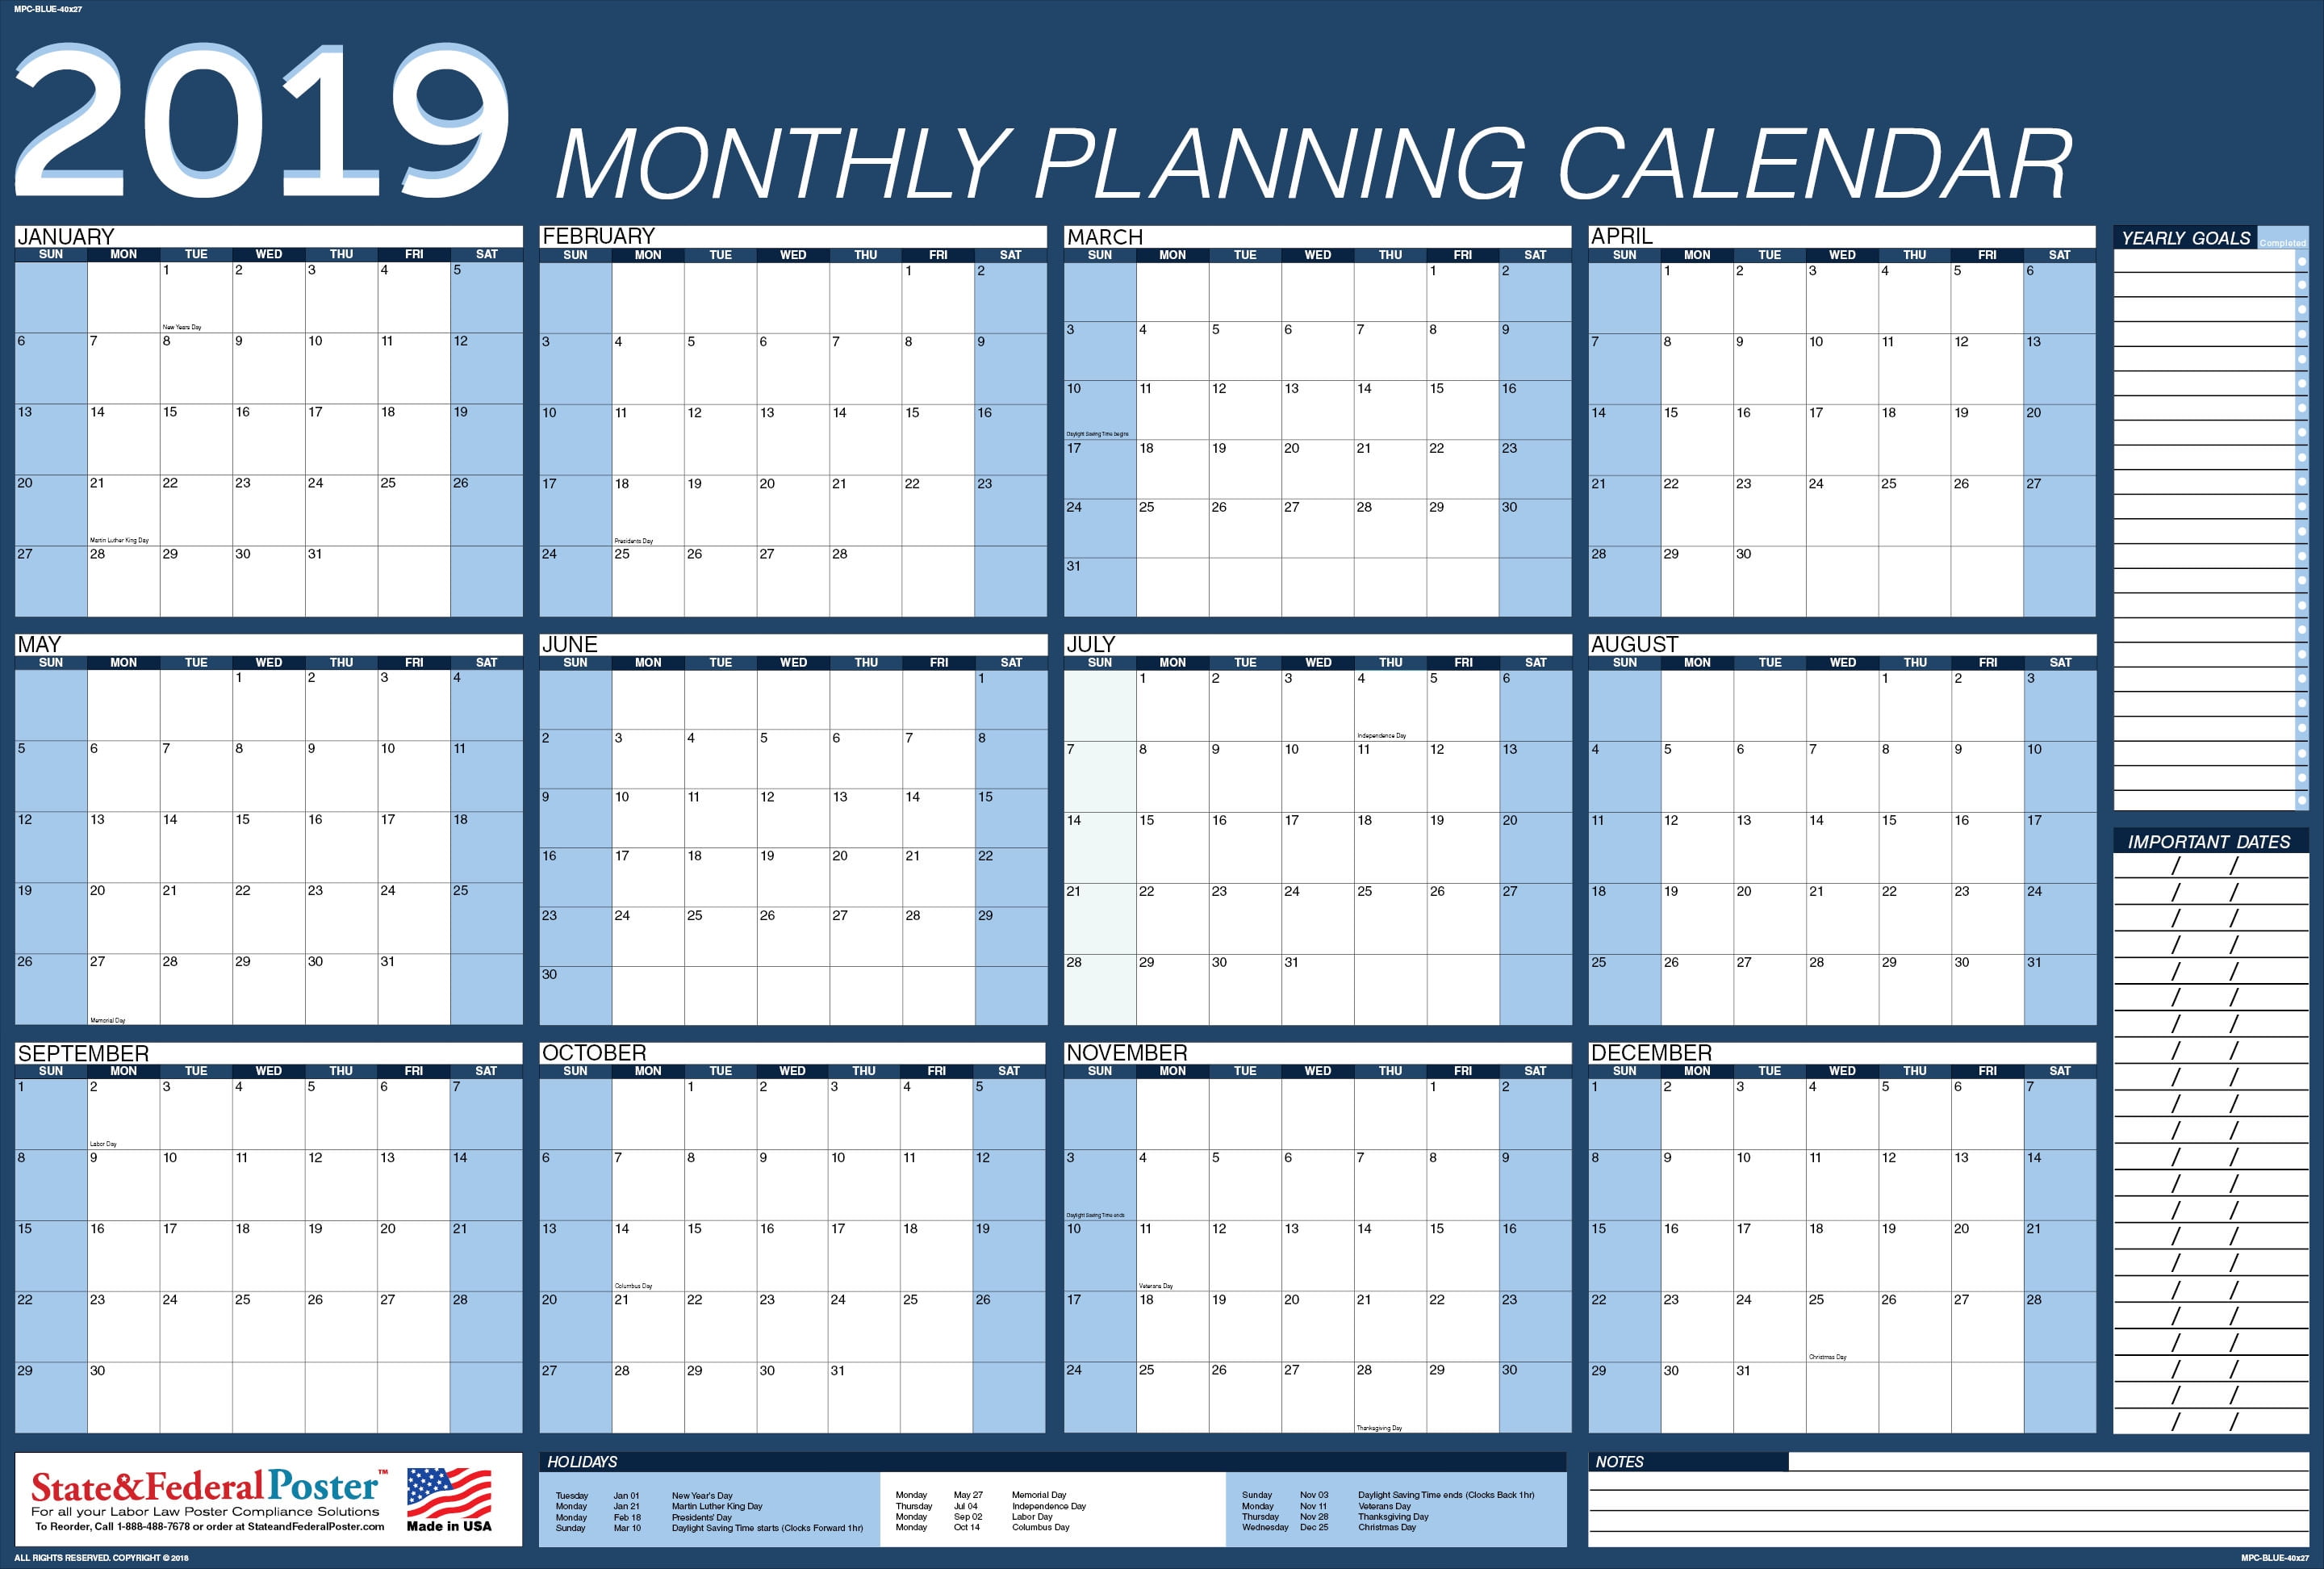 План календарь ма й я. Календарь план. Удобный календарь для планирования. Календарь планировщик. Большой календарь с заметками.